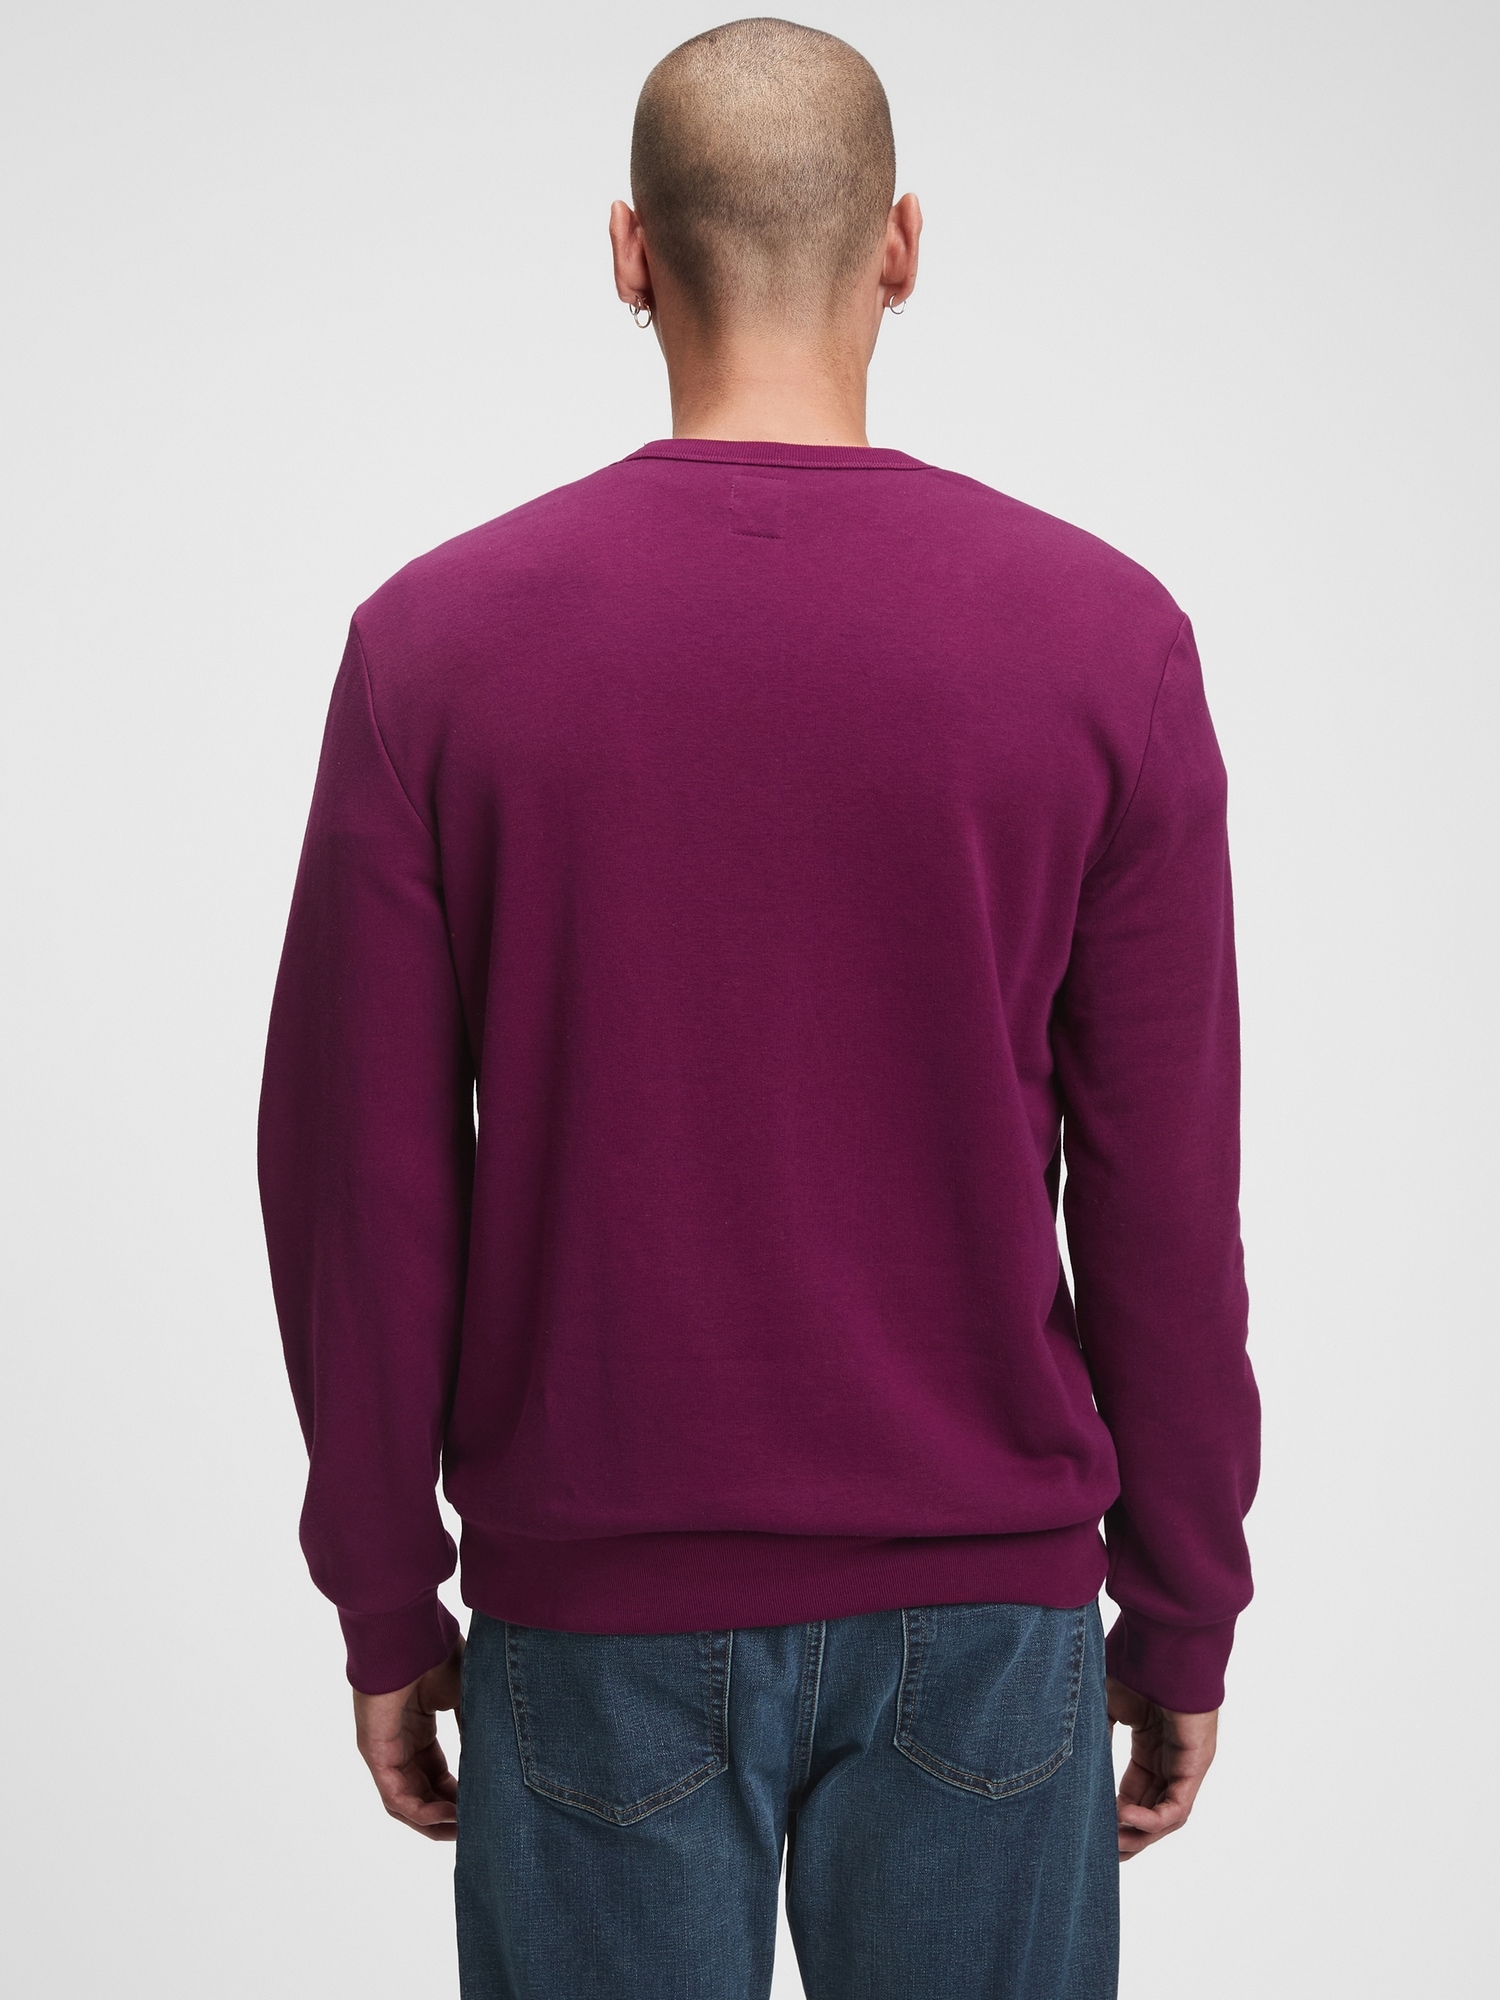 JSY Mens Top Pure Color Hoodie Big Pocket Pullover Winter Sweatshirts